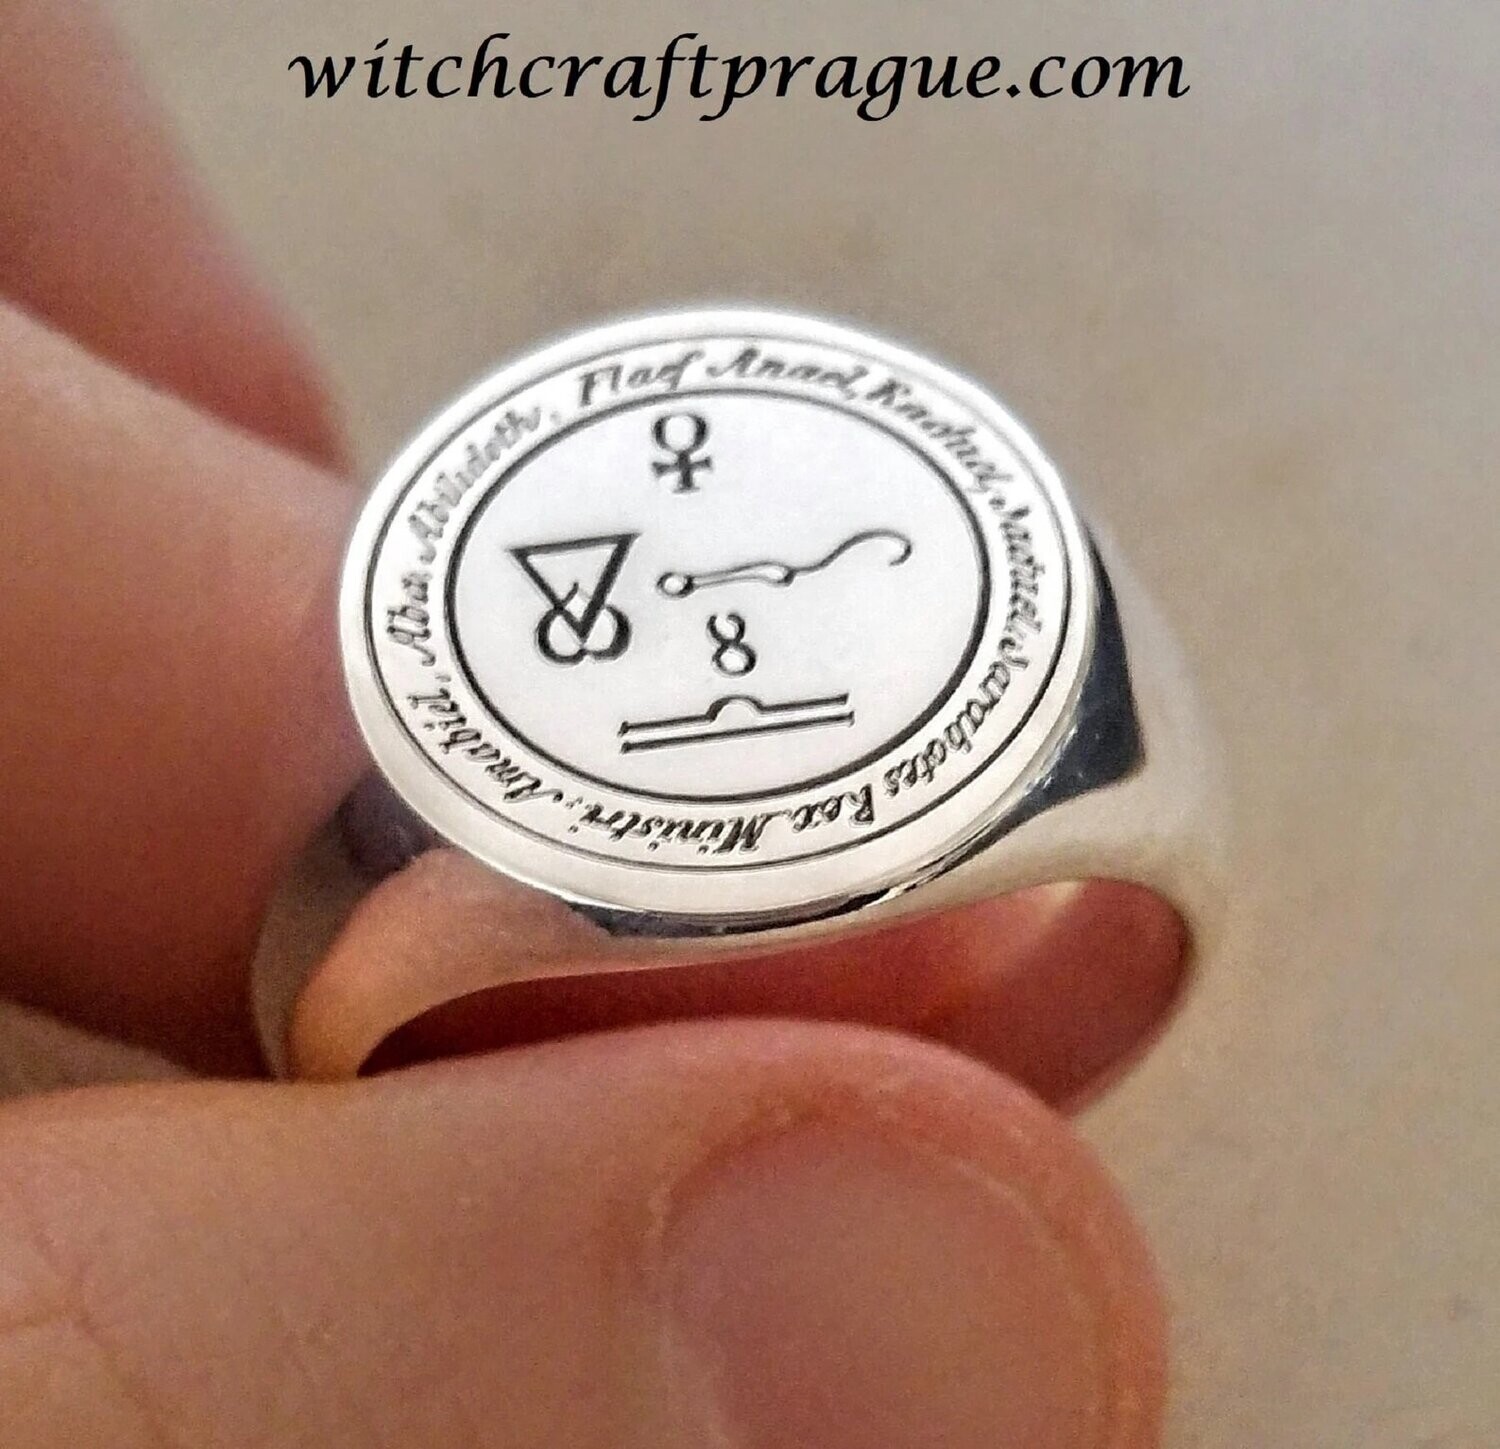 Custom archangel seal ring,witchcraft amulet,success talisman,guardian angel sigil